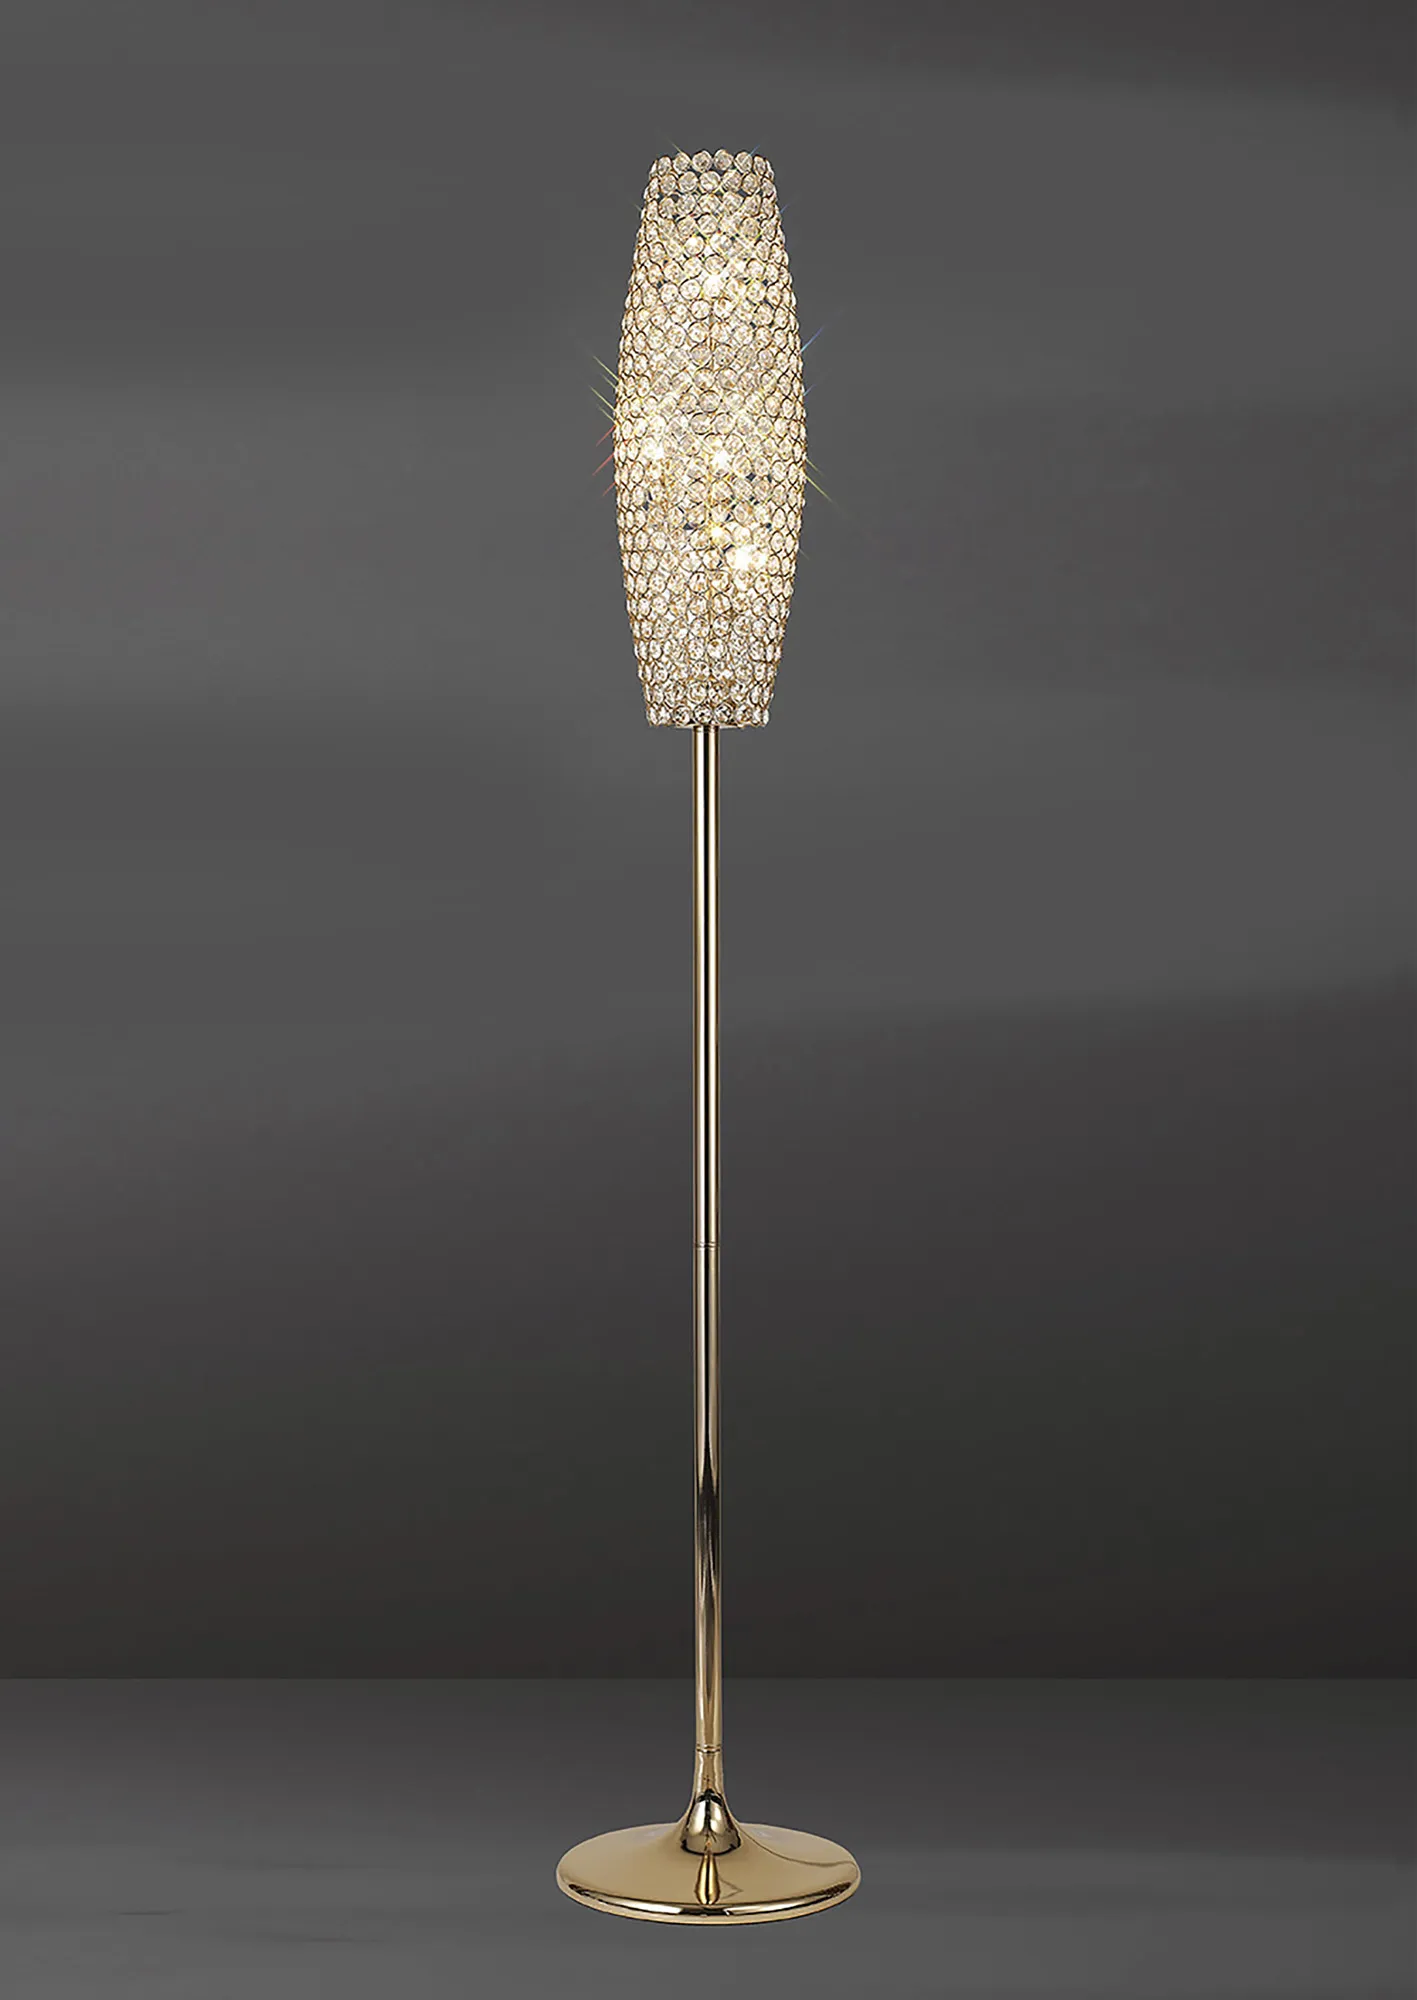 IL30768  Kos Crystal 160cm Floor Lamp 4 Light French Gold